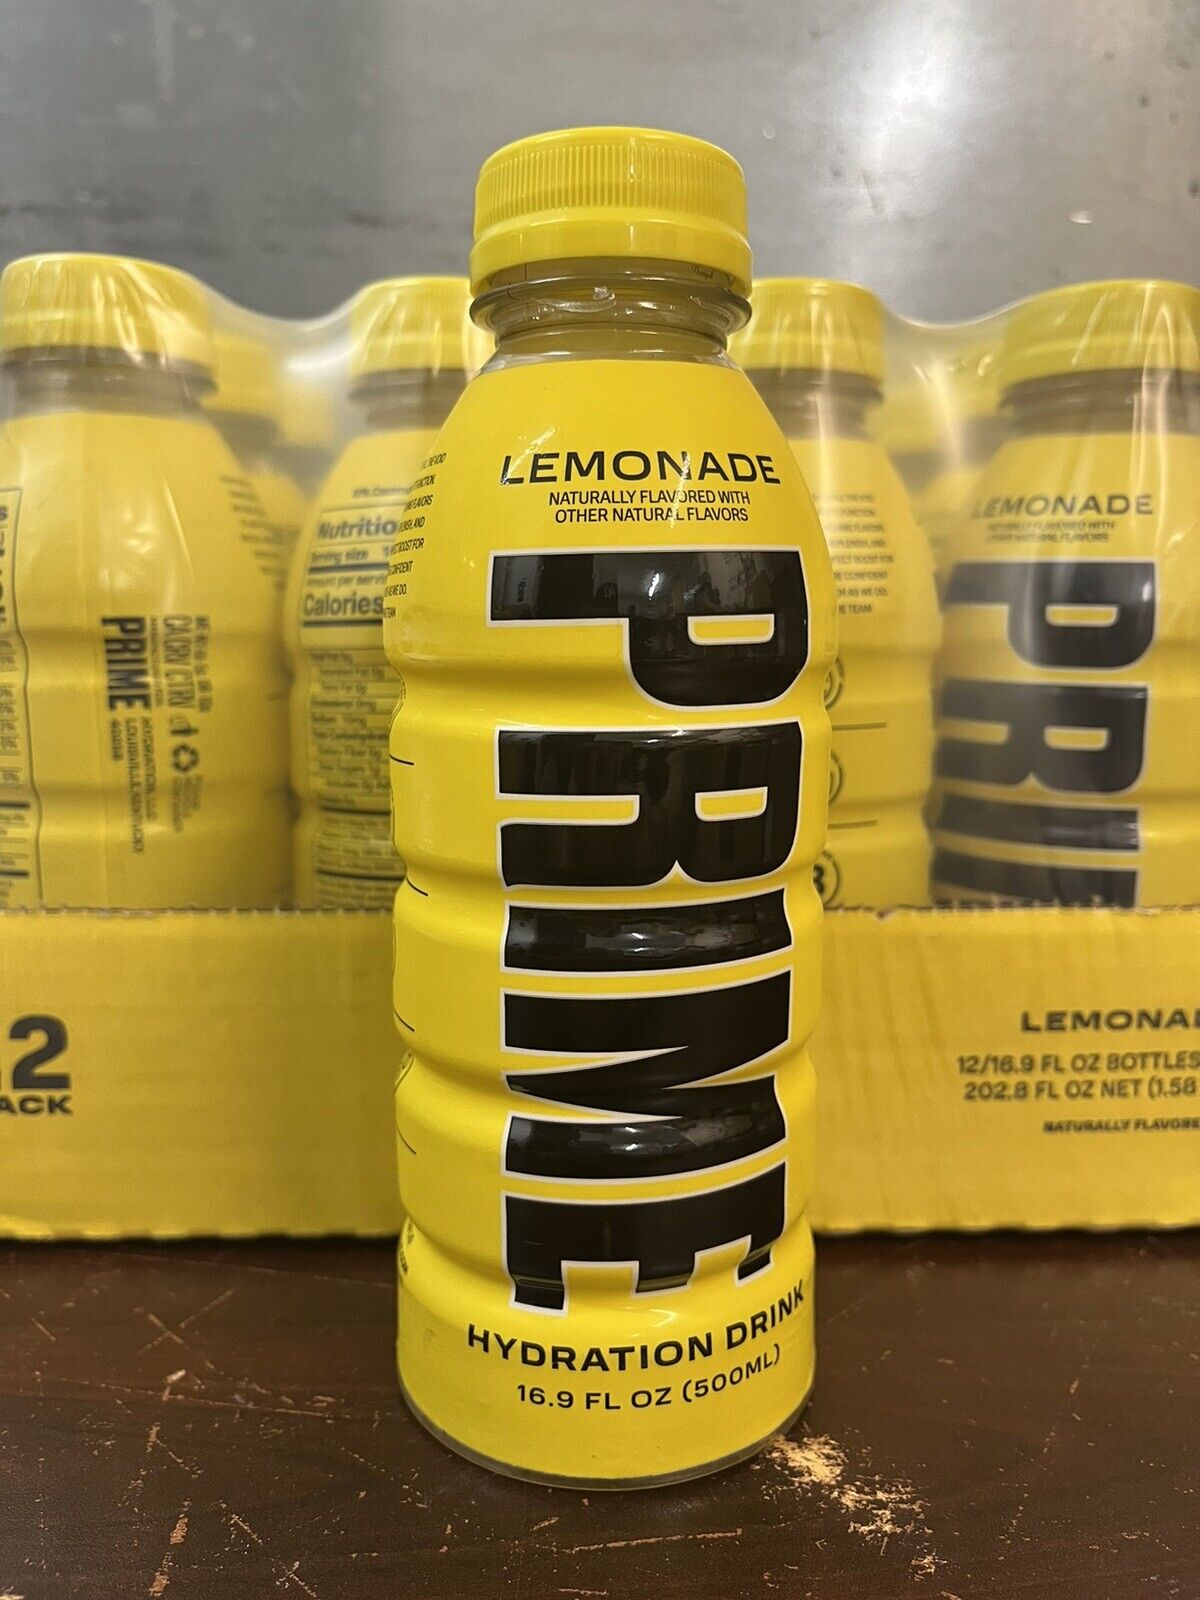 Prime Hydration Drink Lemonade 16.9 FL OZ (Limited Edition) NEW FLAVOR.